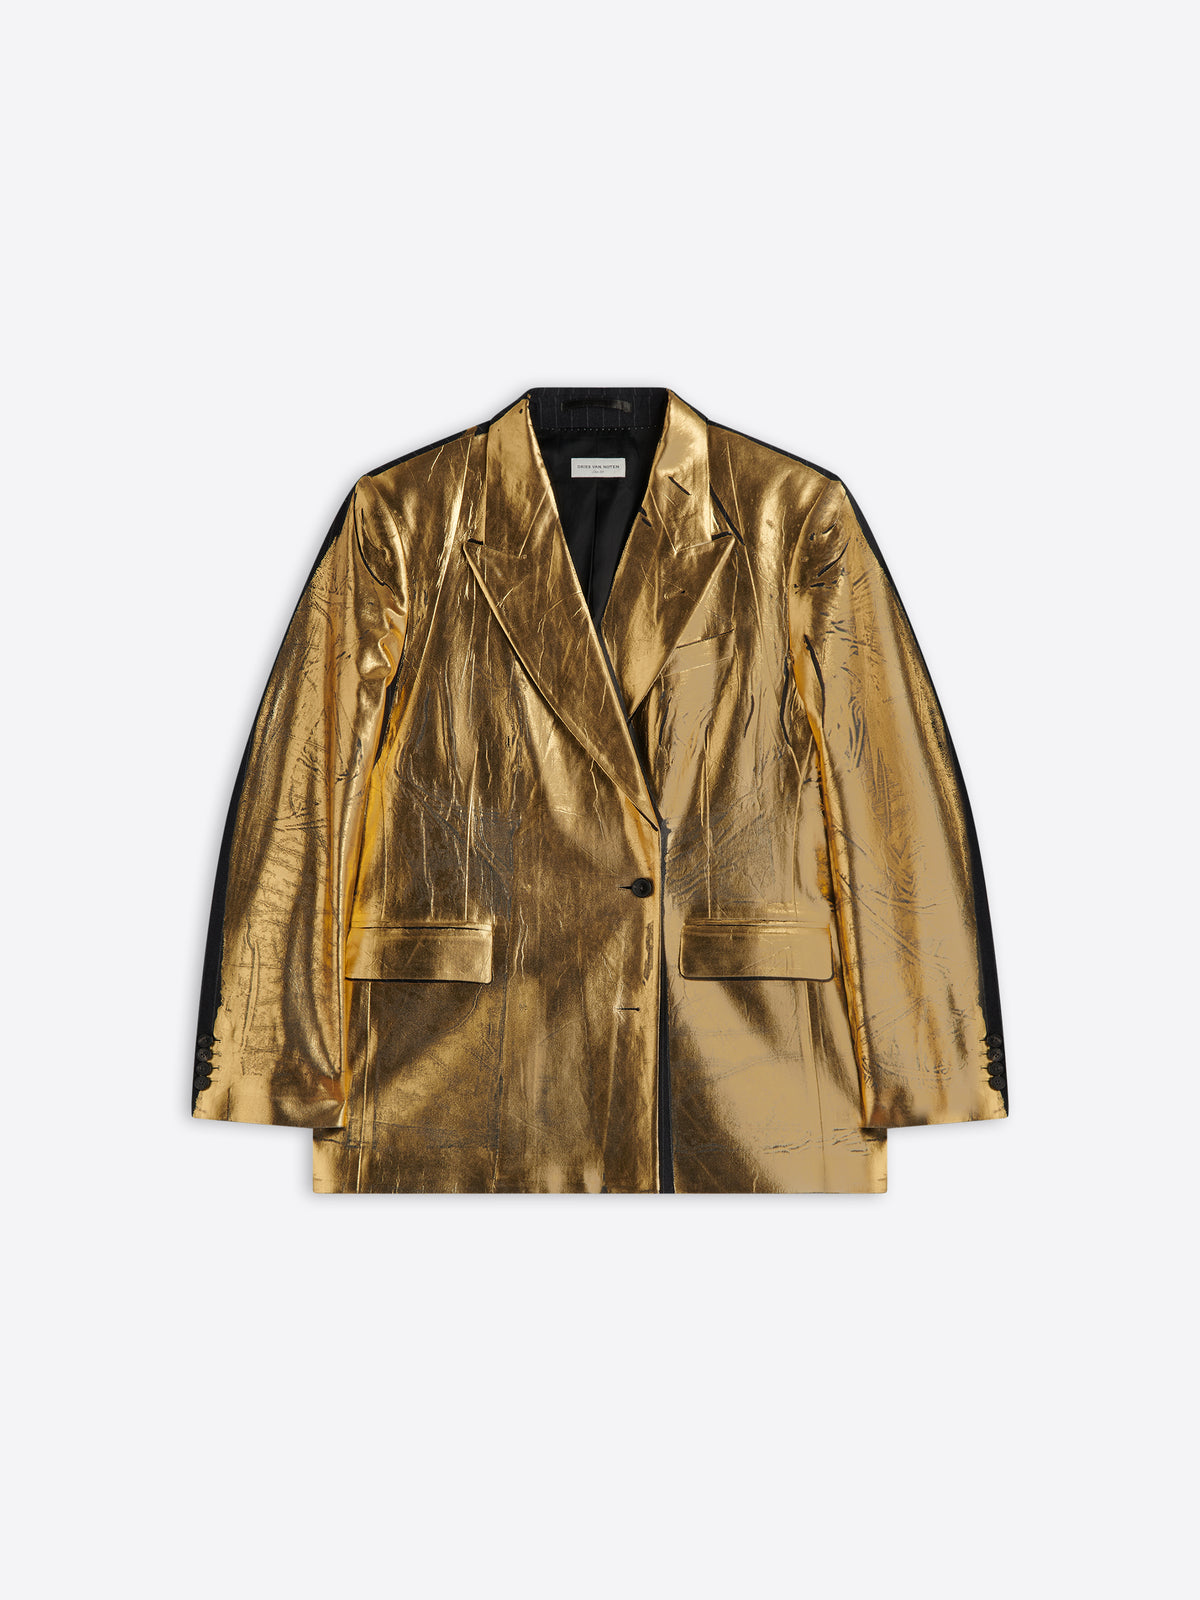 Gold foiled blazer